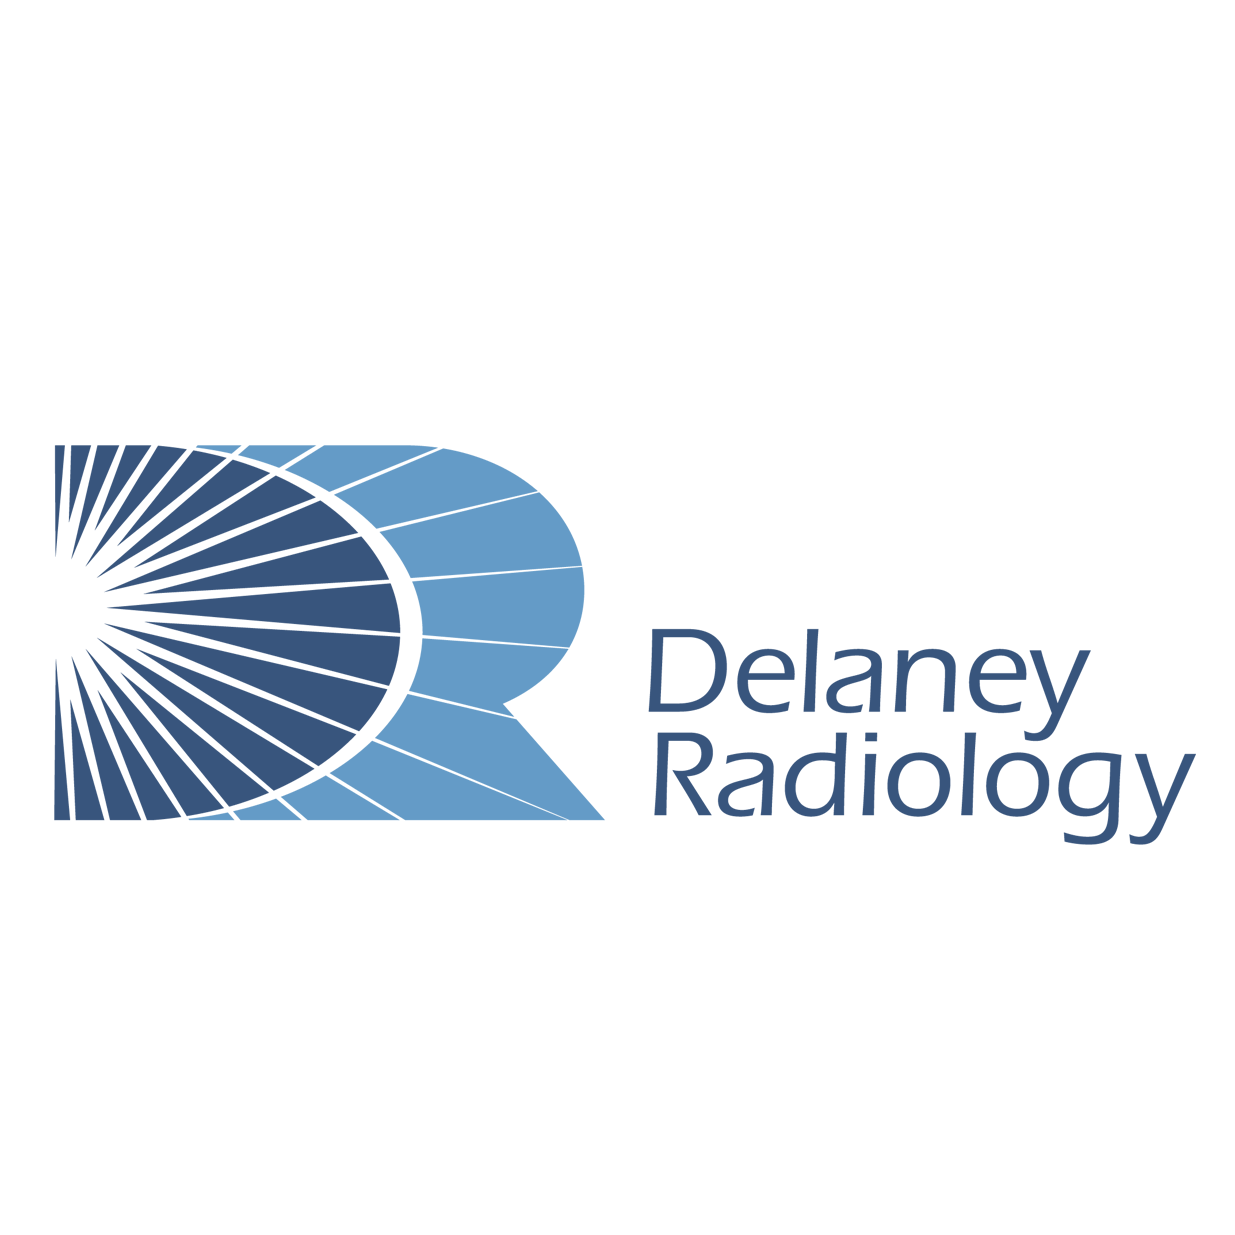 Delaney Radiologists